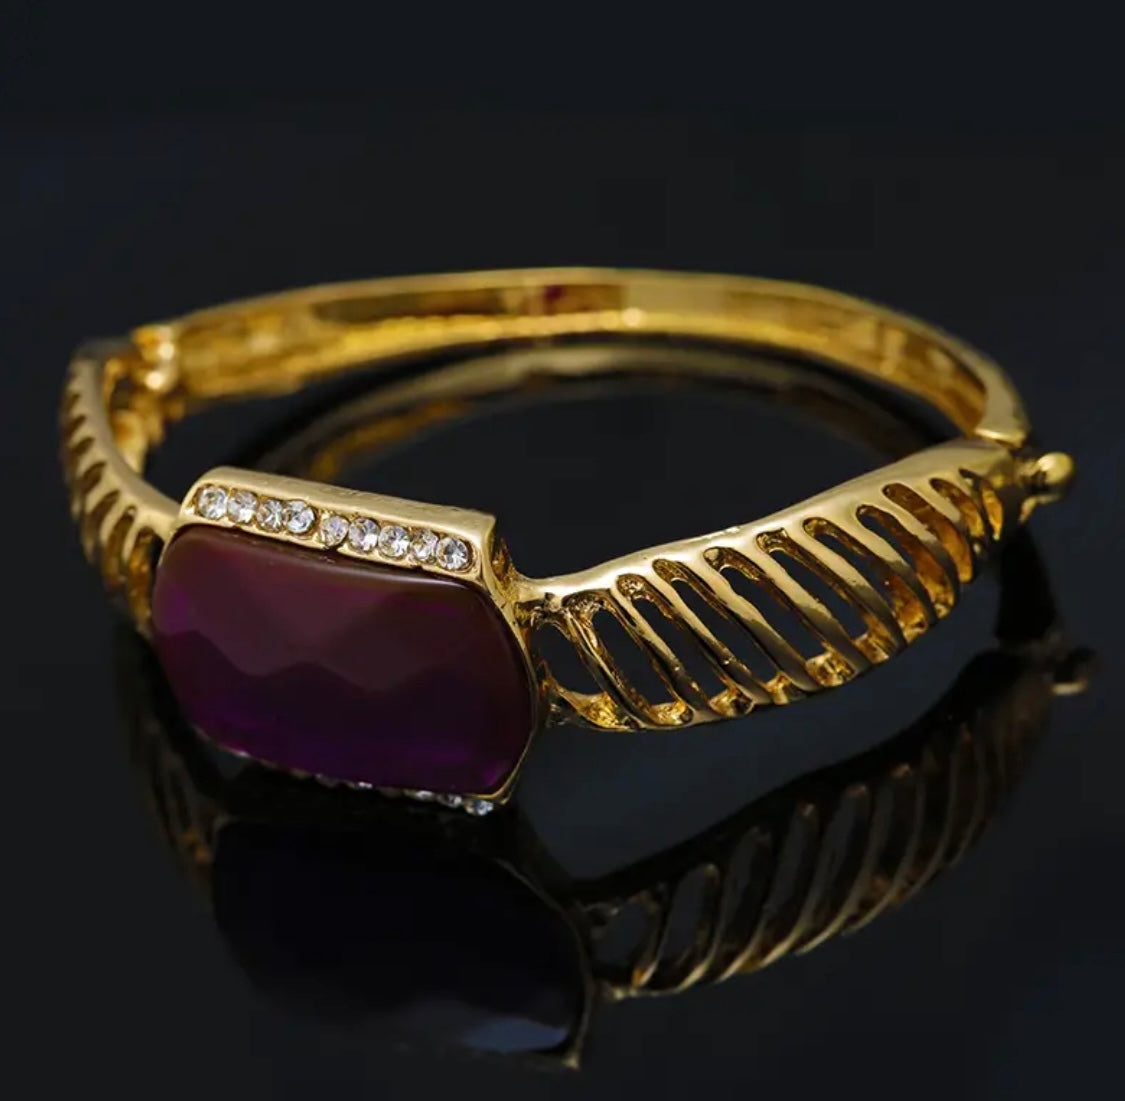 Amazing five piece gold,rhinestone set with purple emblems.